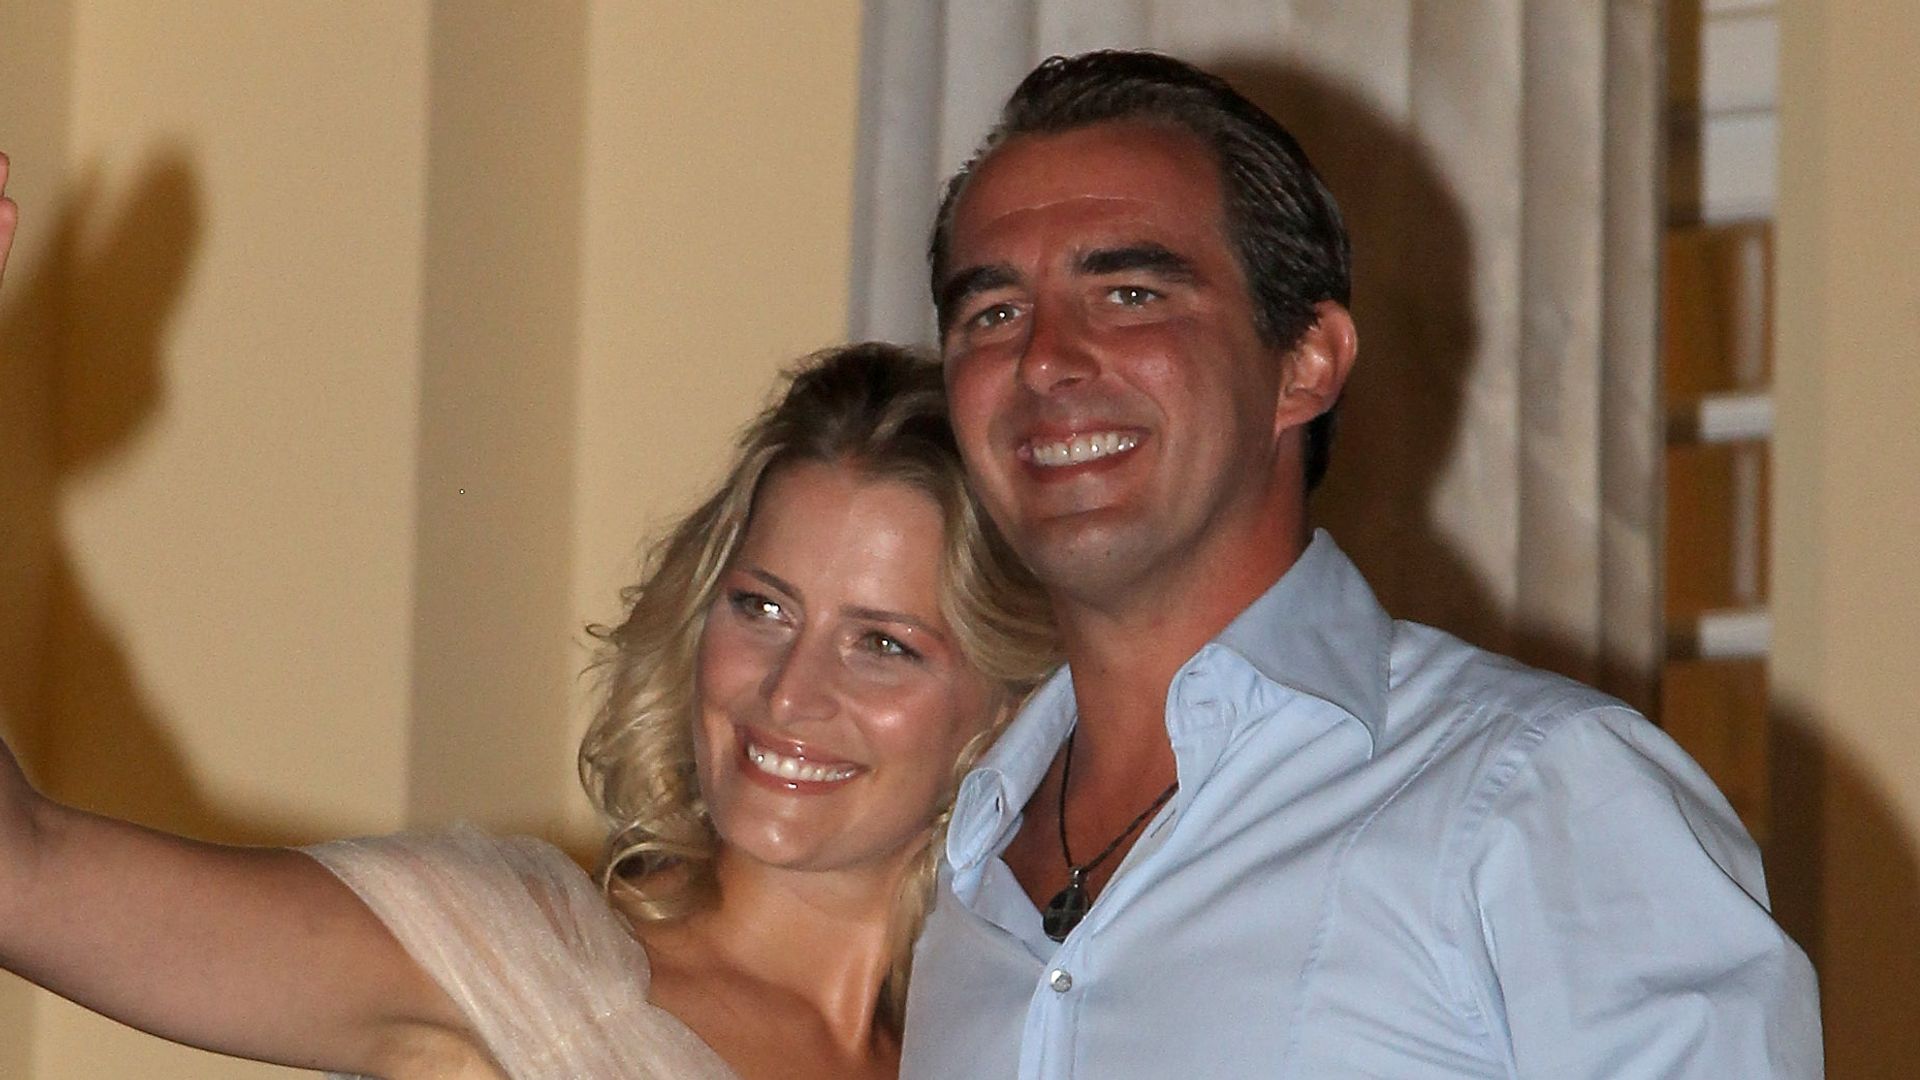 Prince Nikolaos of Greece and Princess Tatiana of Greece announce shocking divorce news - details